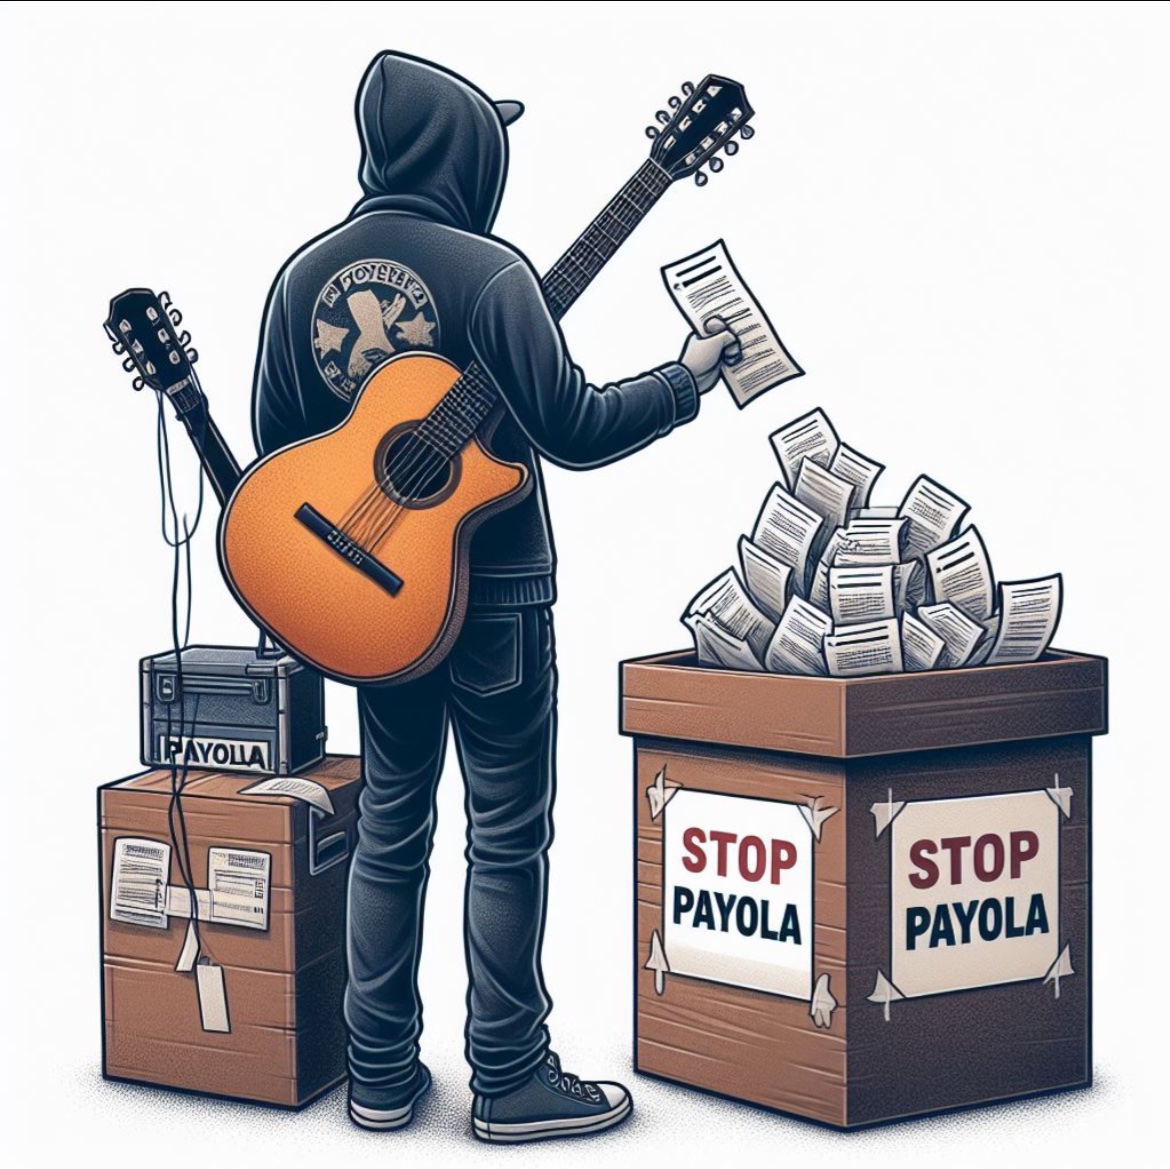 Please #StopPayola @NAS_Spotlight #freeEdEagle @edeagle89 @SpotifyCares do they? #indiemusic